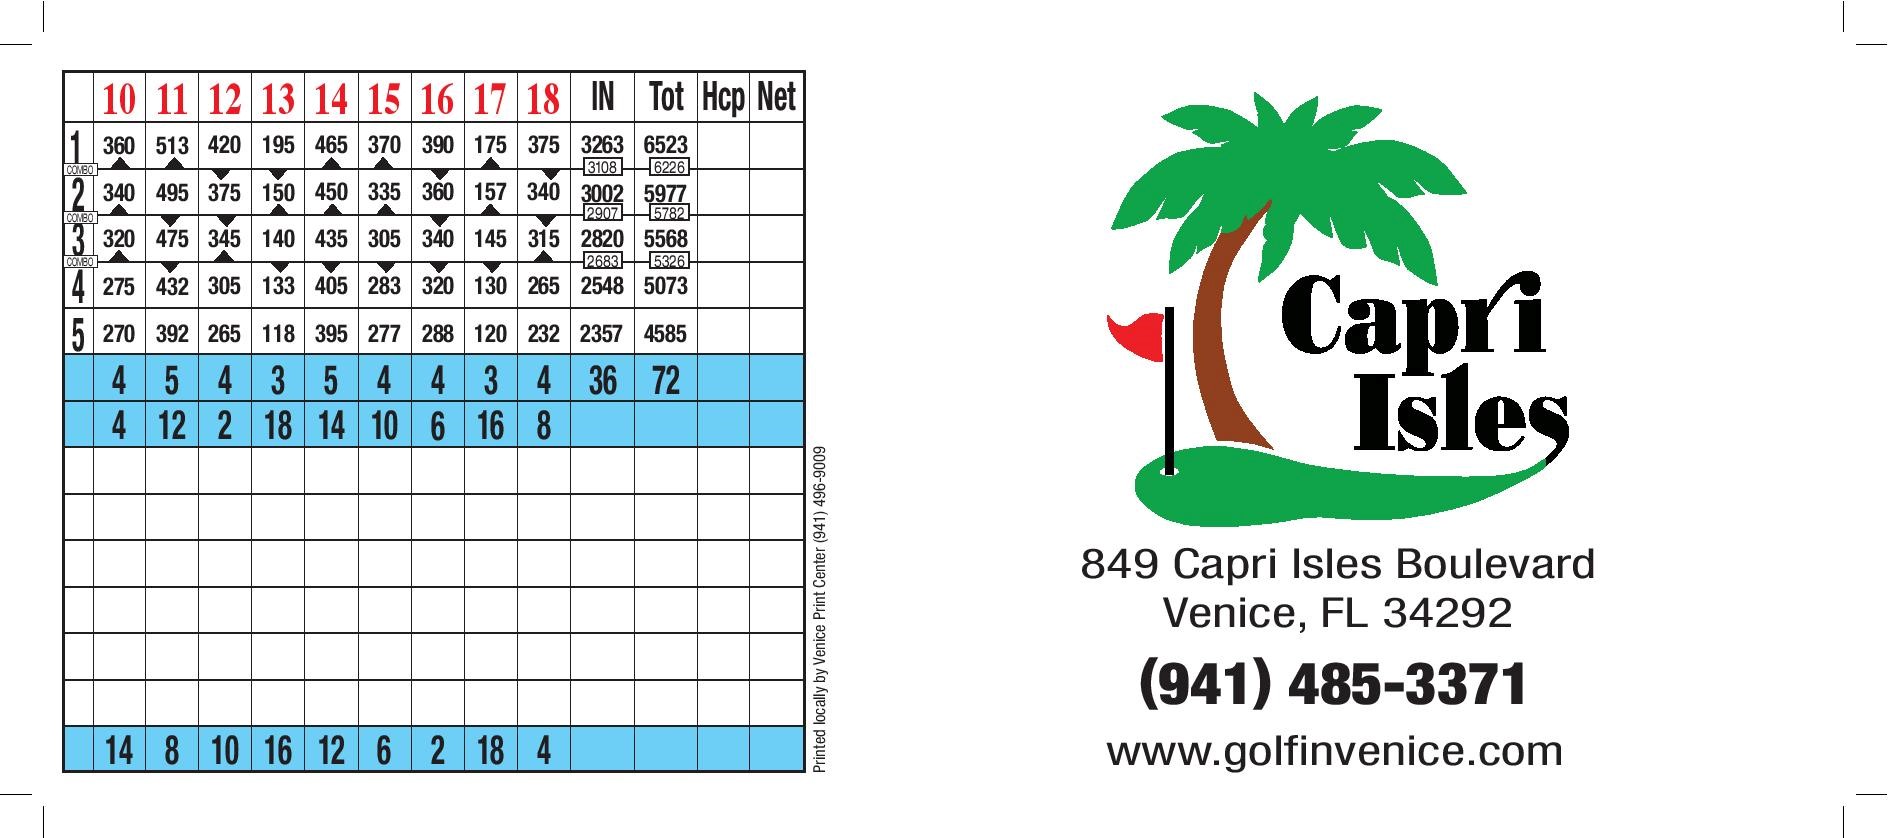 Capri score card back nine 2020 2021 page 002